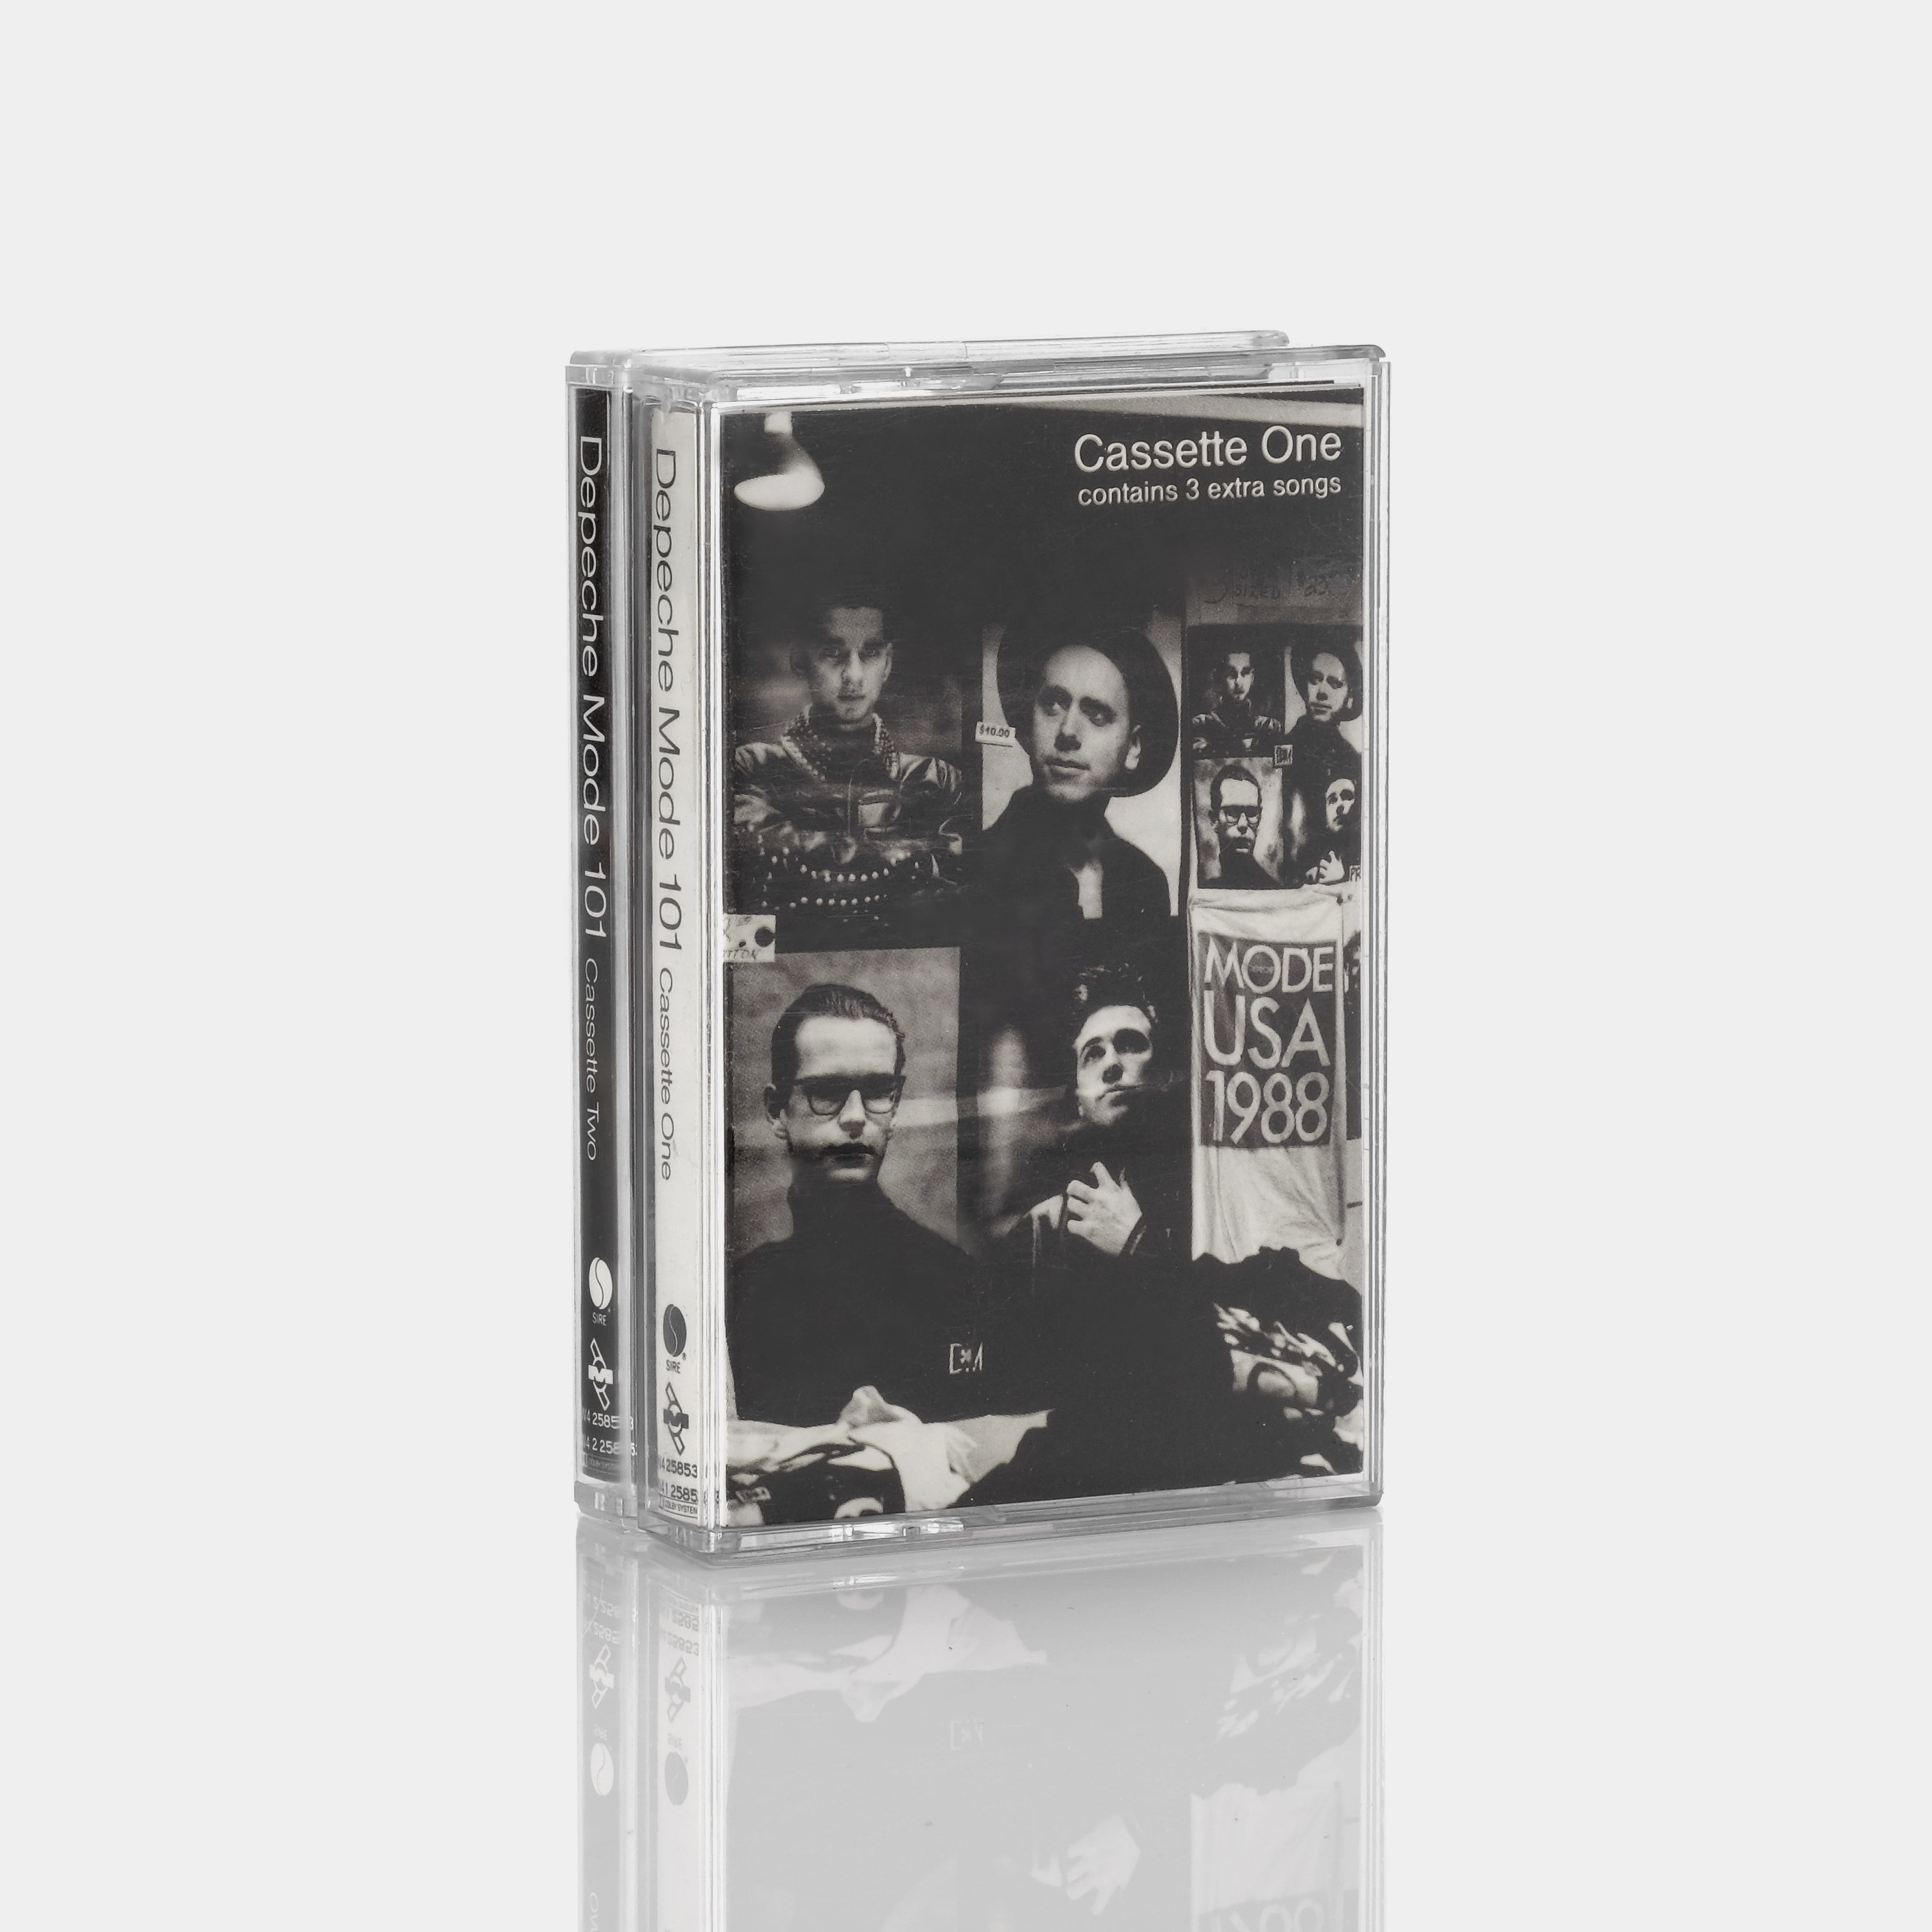 Depeche Mode - 101 2x Cassette Tape